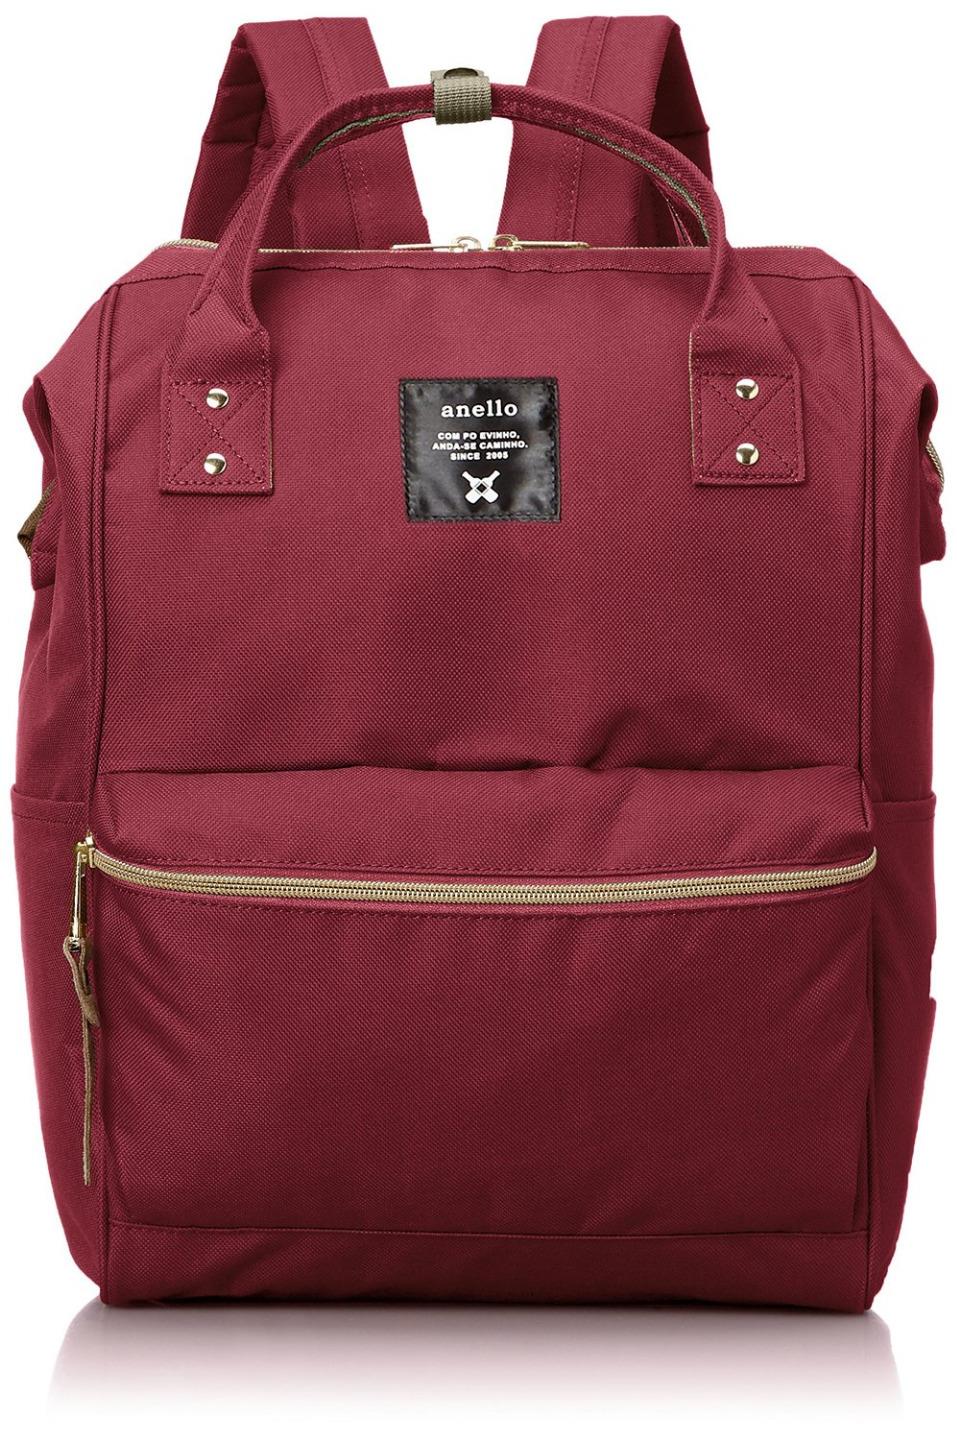 Buy ?Original Japan ANELLO BACKPACK? Campus Rucksack Camping Canvas School Travel Bag Deals for ...